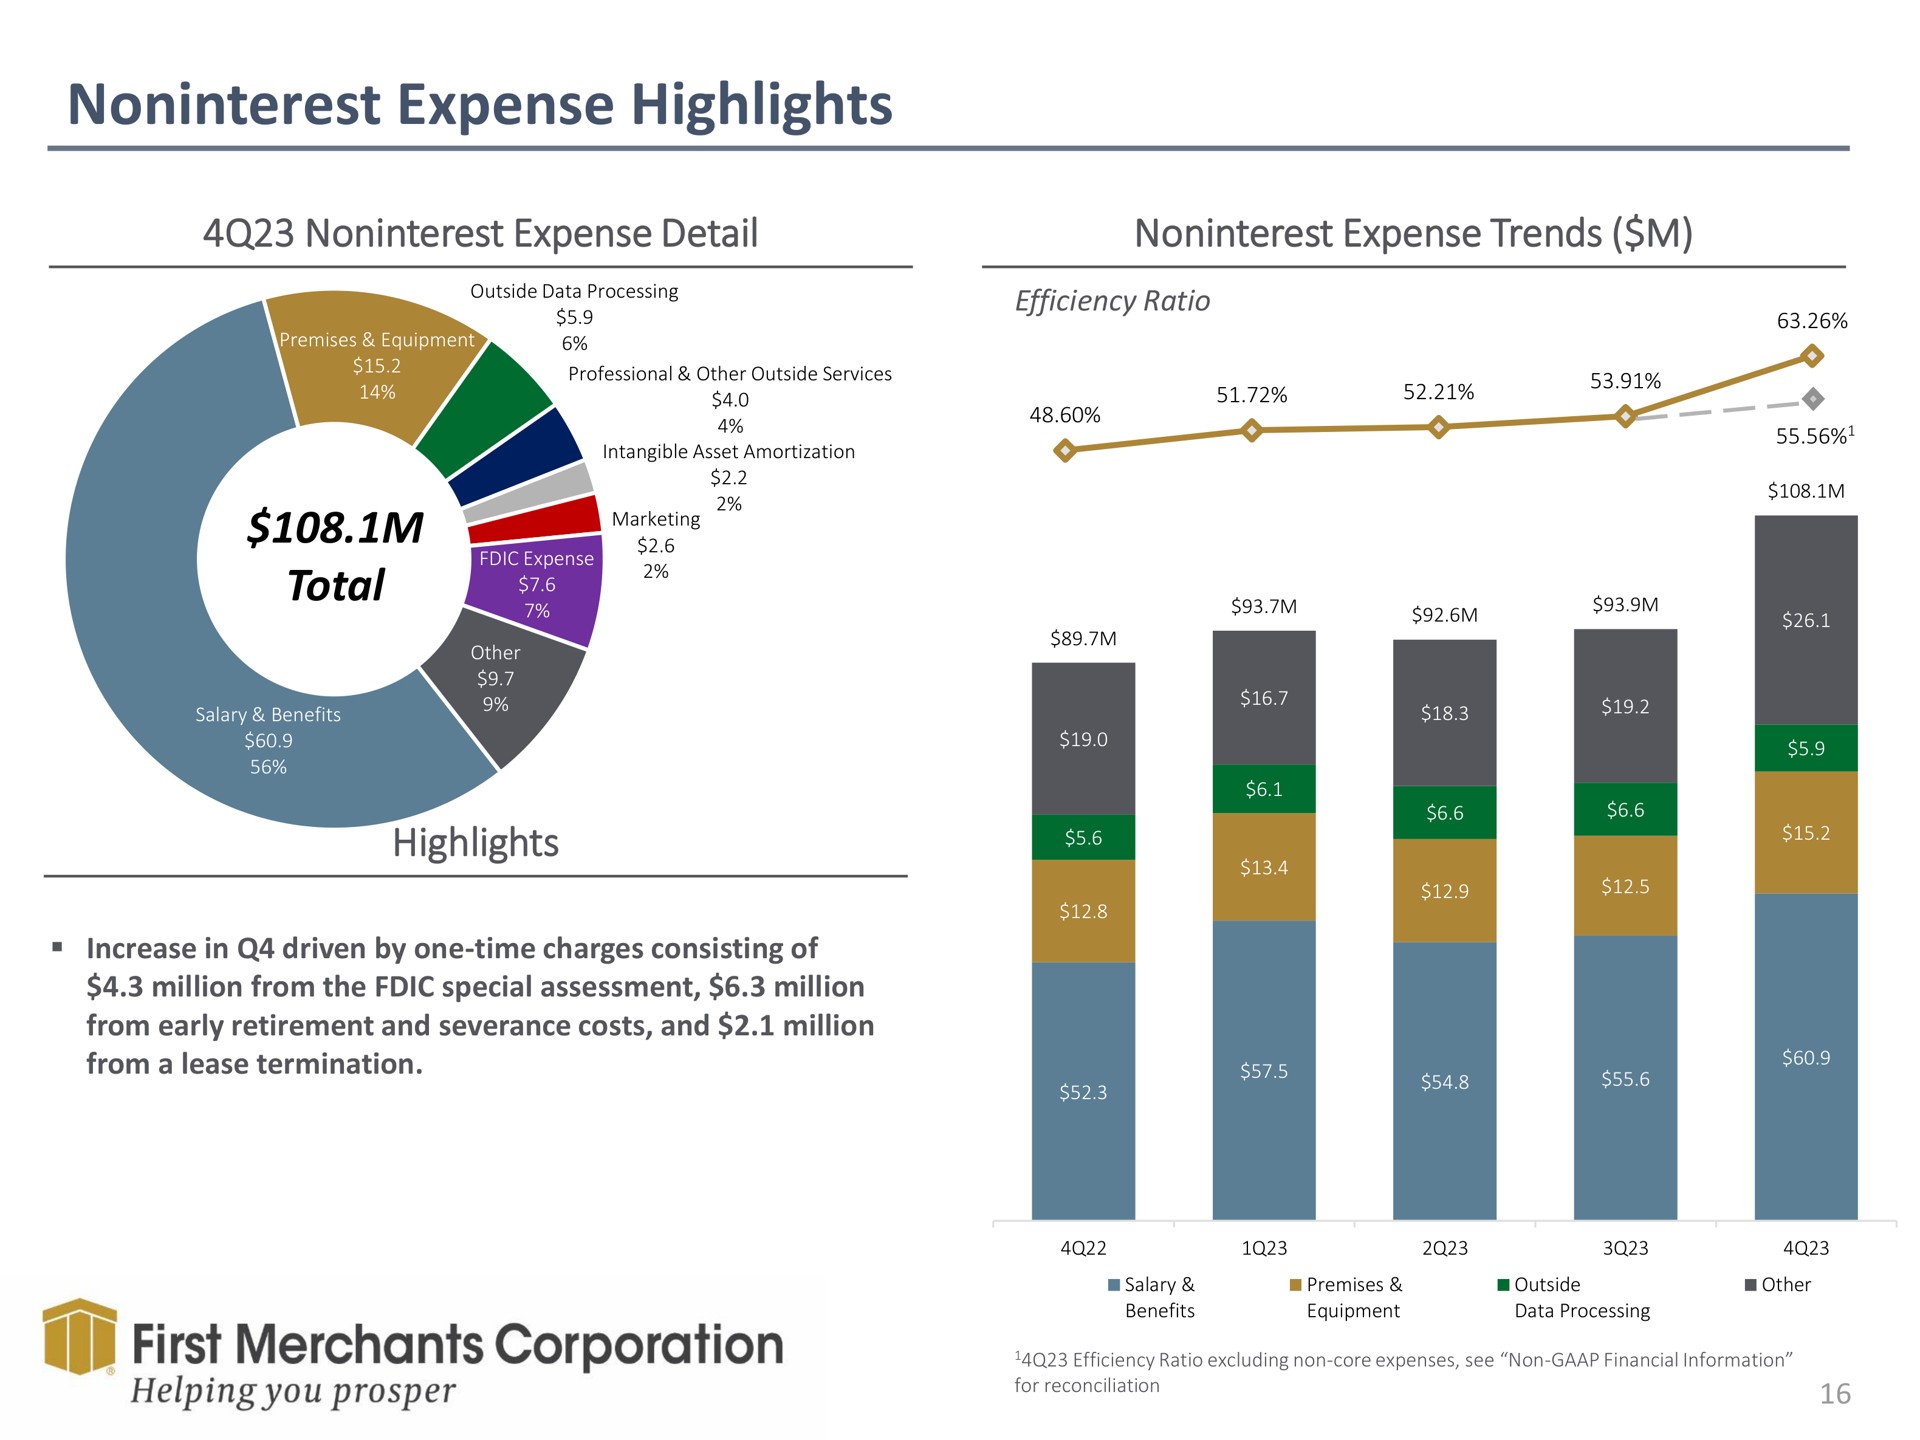 expense highlights expense detail expense trends total highlights first merchants corporation helping you prosper | First Merchants